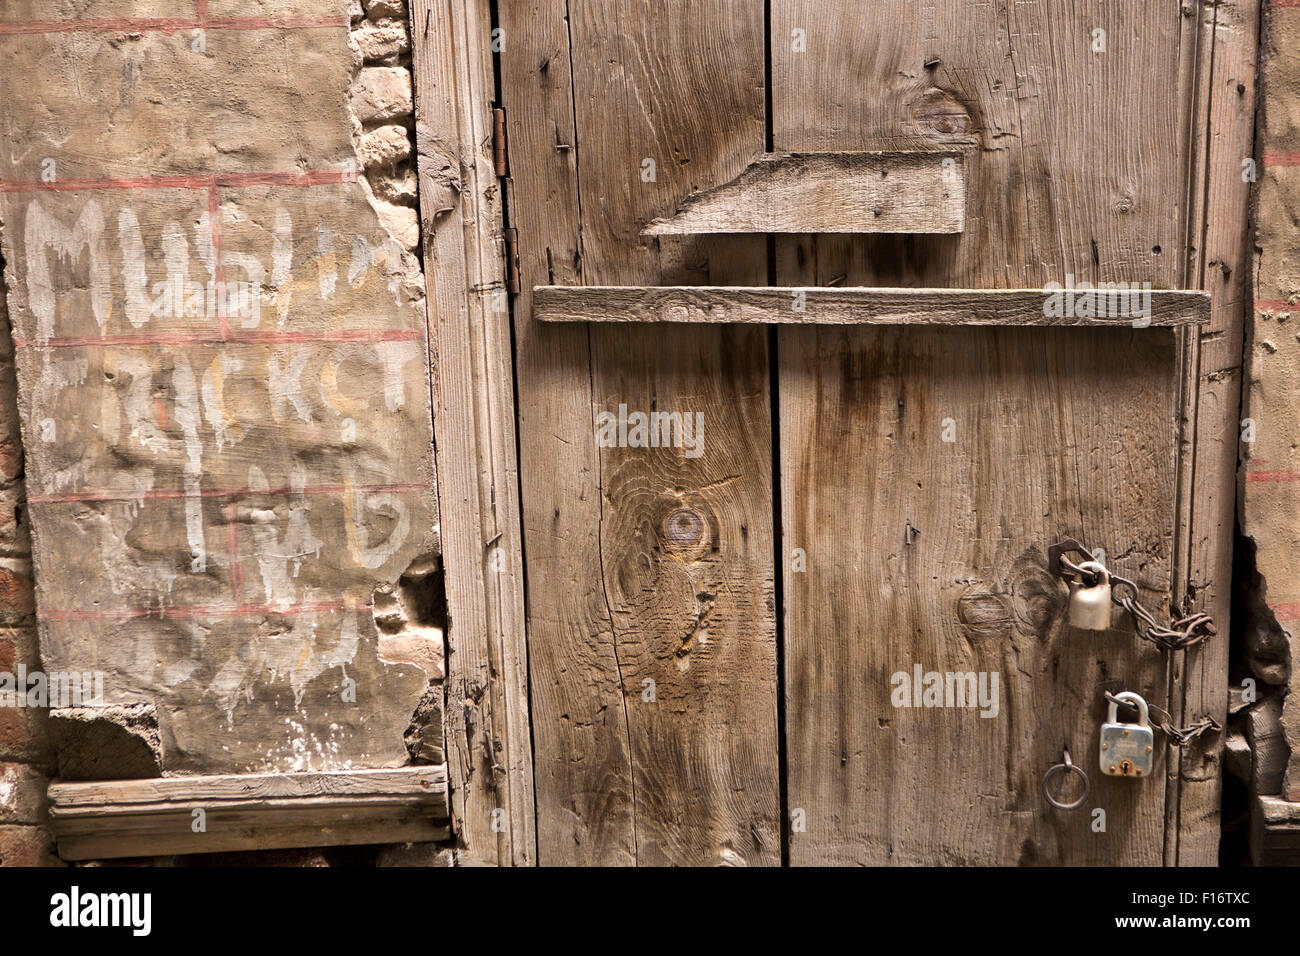 India, Jammu & Kashmir, Srinagar, old city, Khankah i Moulla, Muslim Cricket Club sign and rough wooden door Stock Photo